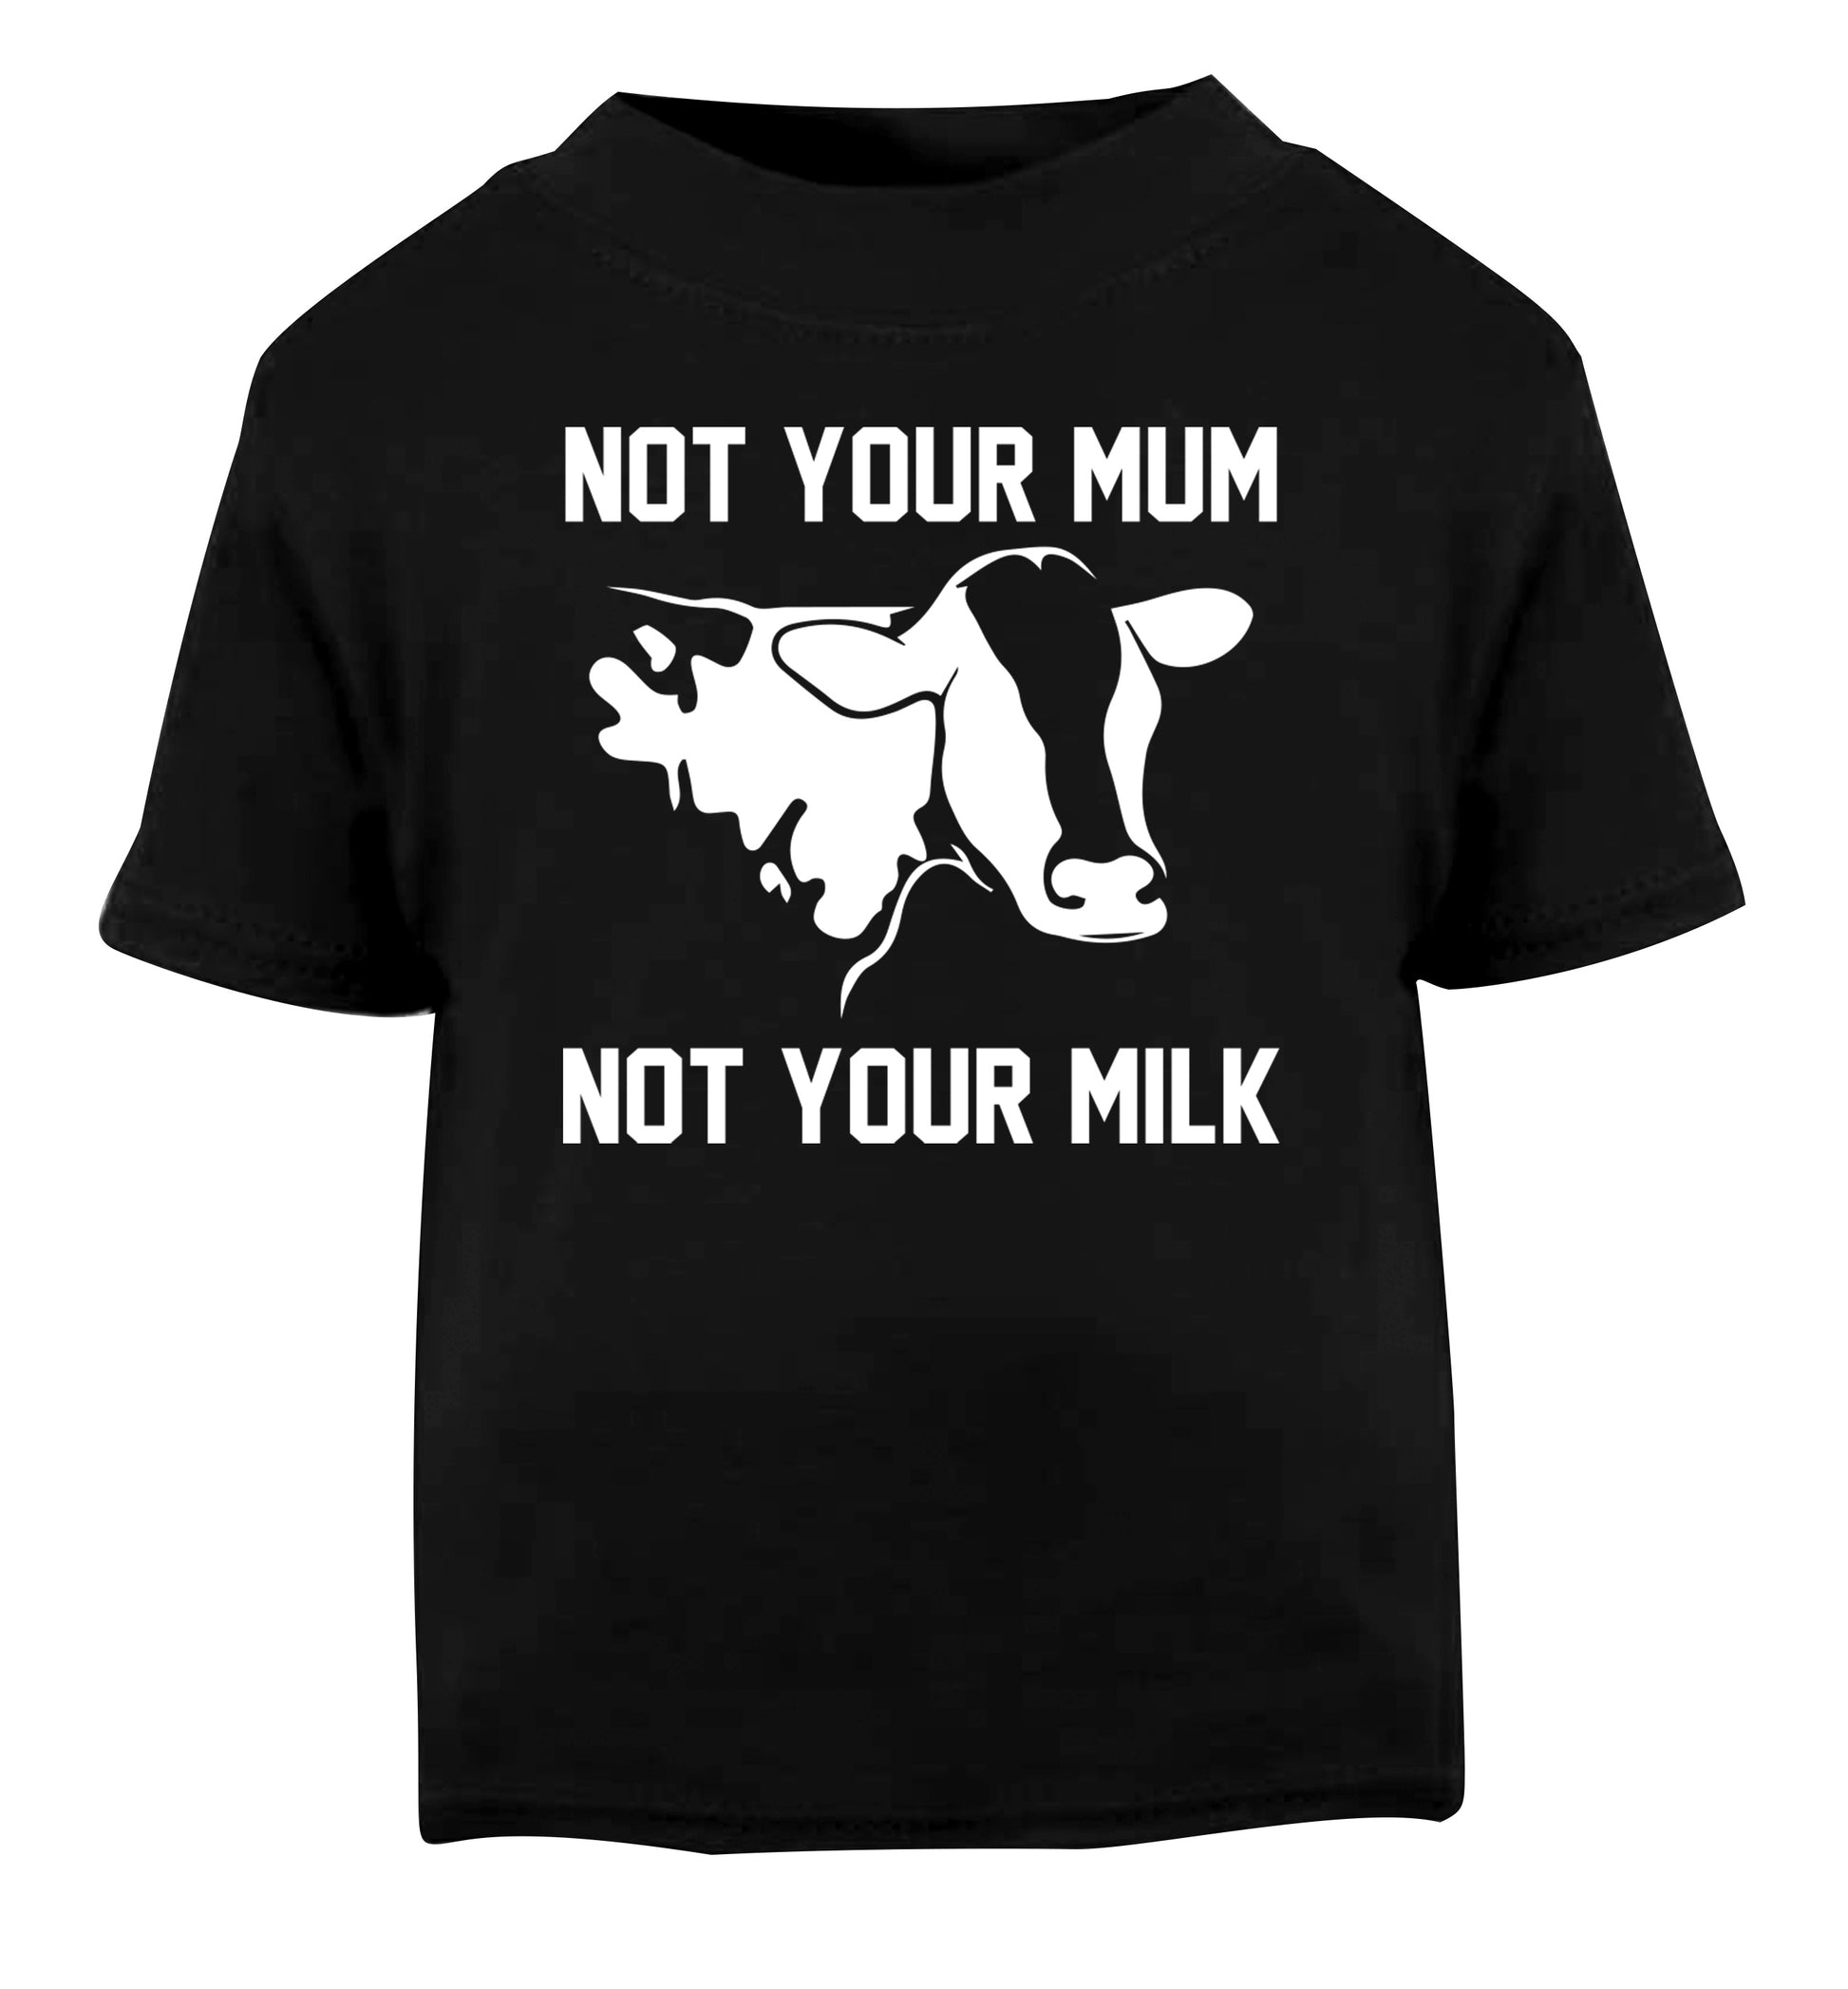 Not your mum not your milk Black Baby Toddler Tshirt 2 years